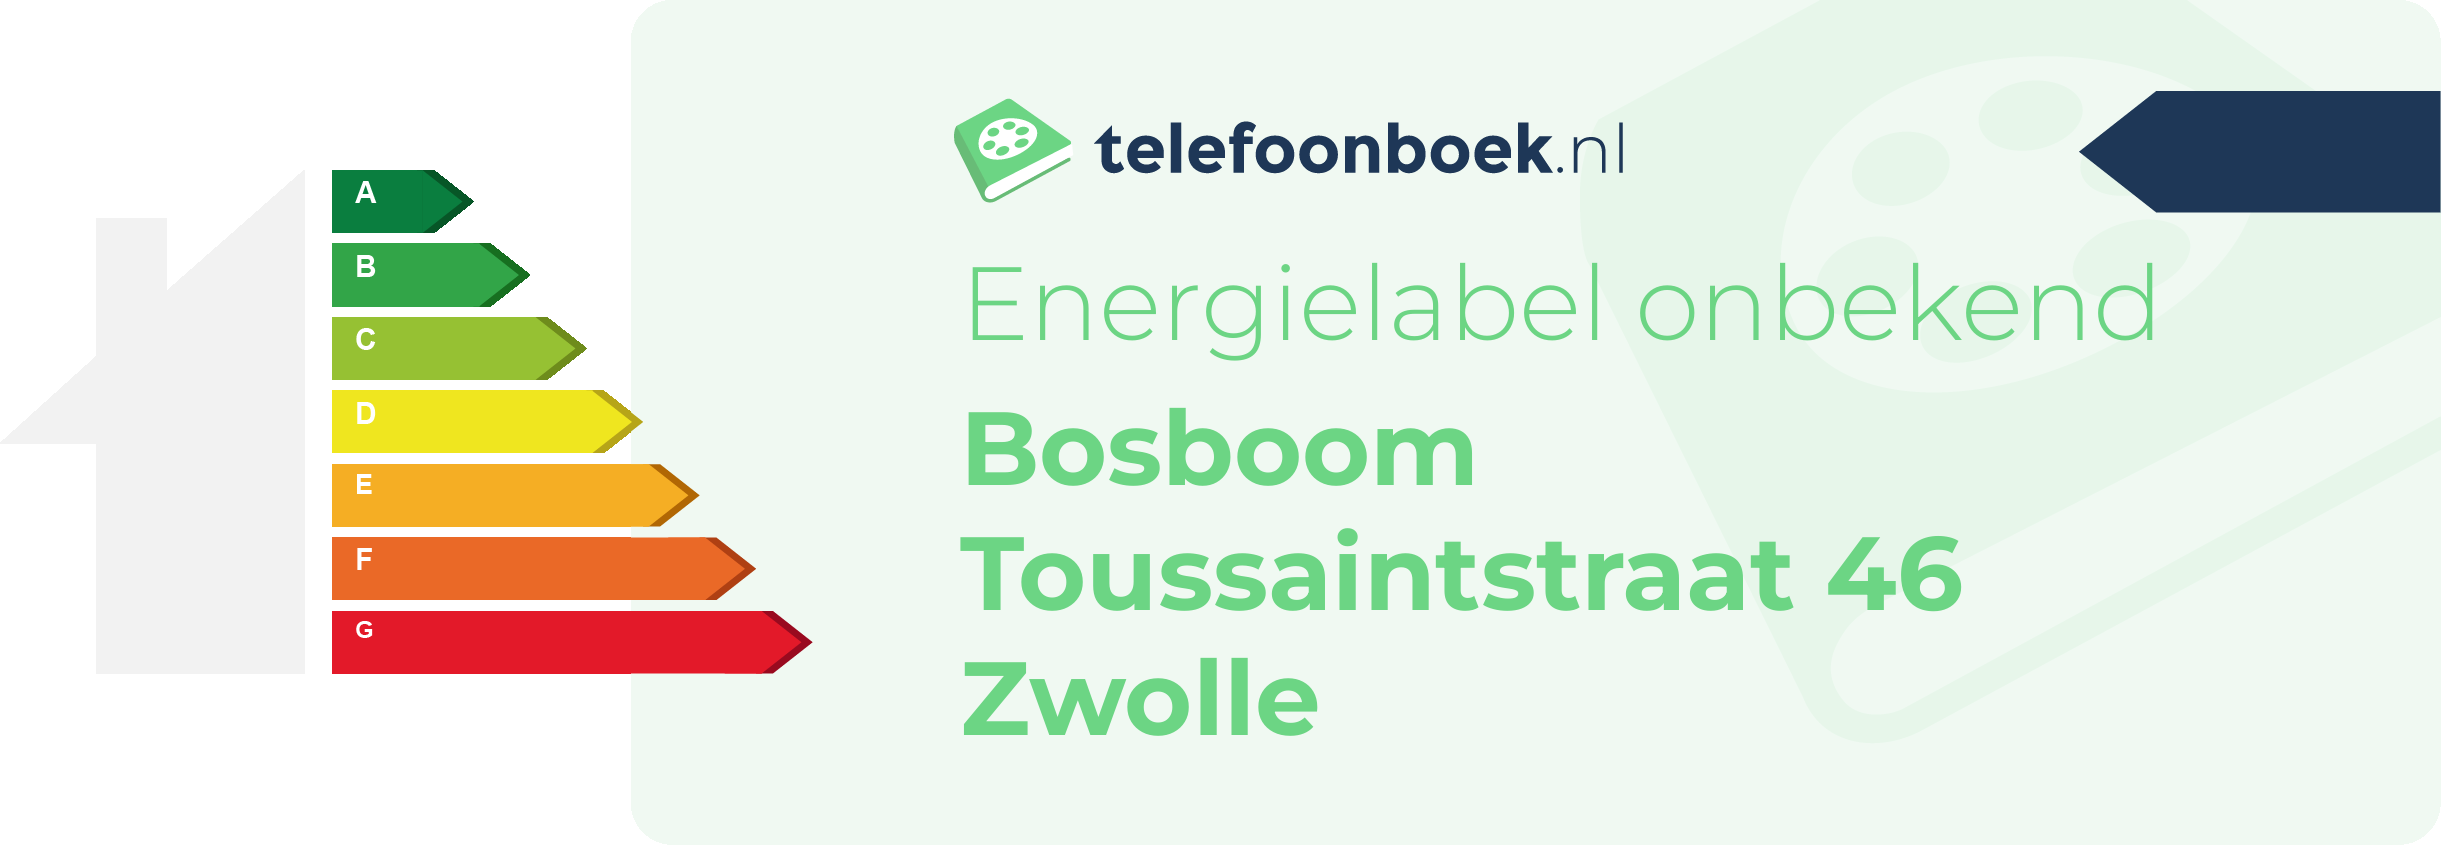 Energielabel Bosboom Toussaintstraat 46 Zwolle